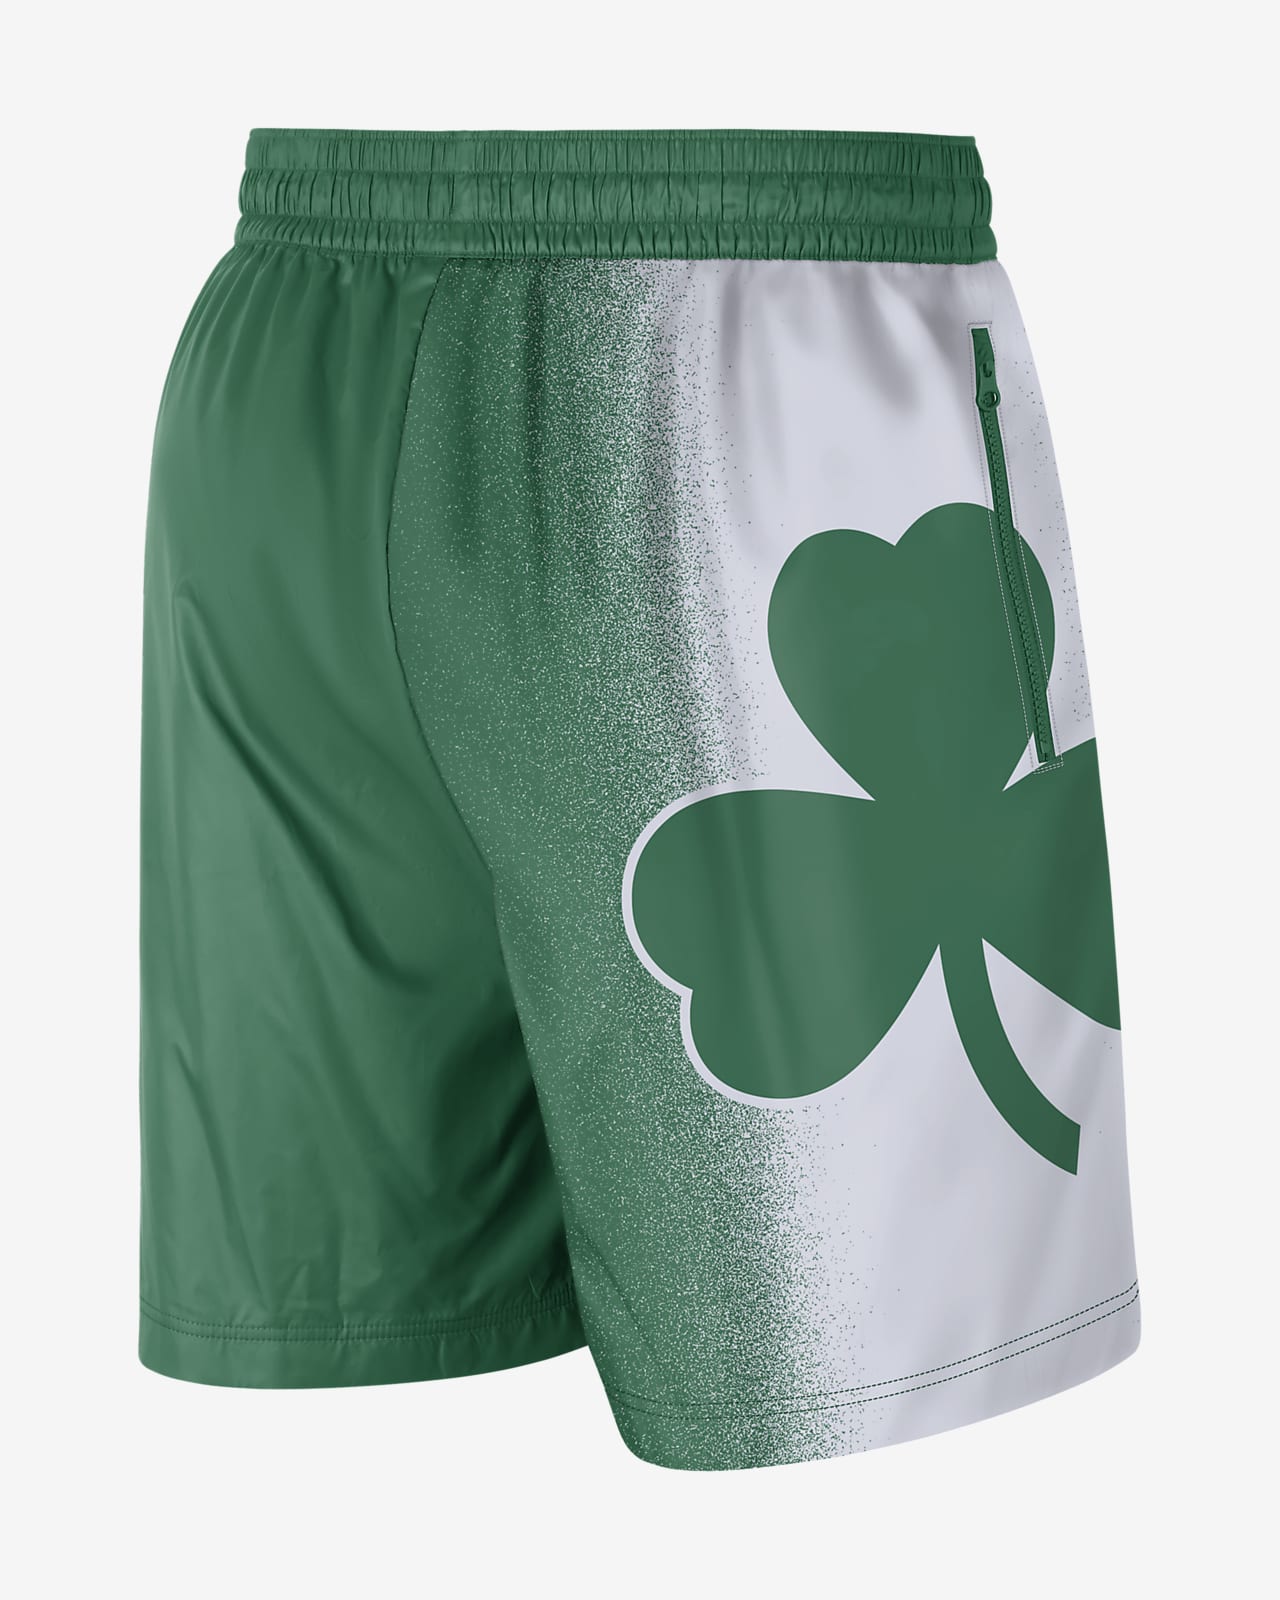 Nike Boston Celtics Authentic NBA THERMA FLEX Shorts M-Tall AV1044-032